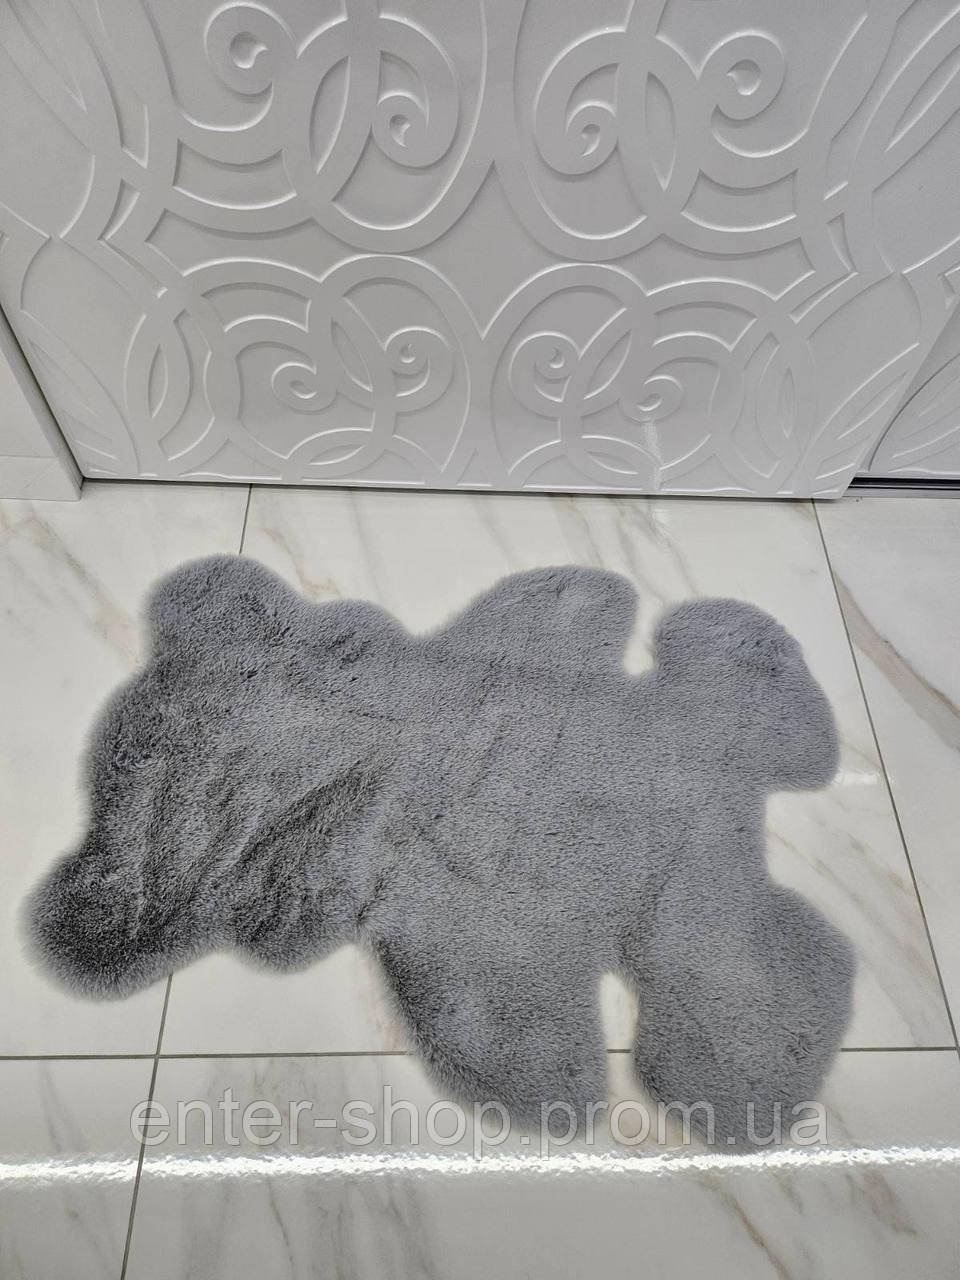 Декоративний килимок з штучного хутра Ведмедик Дитячий килимок Ведмедик М'який дитячий килимок Килимок ведмедя